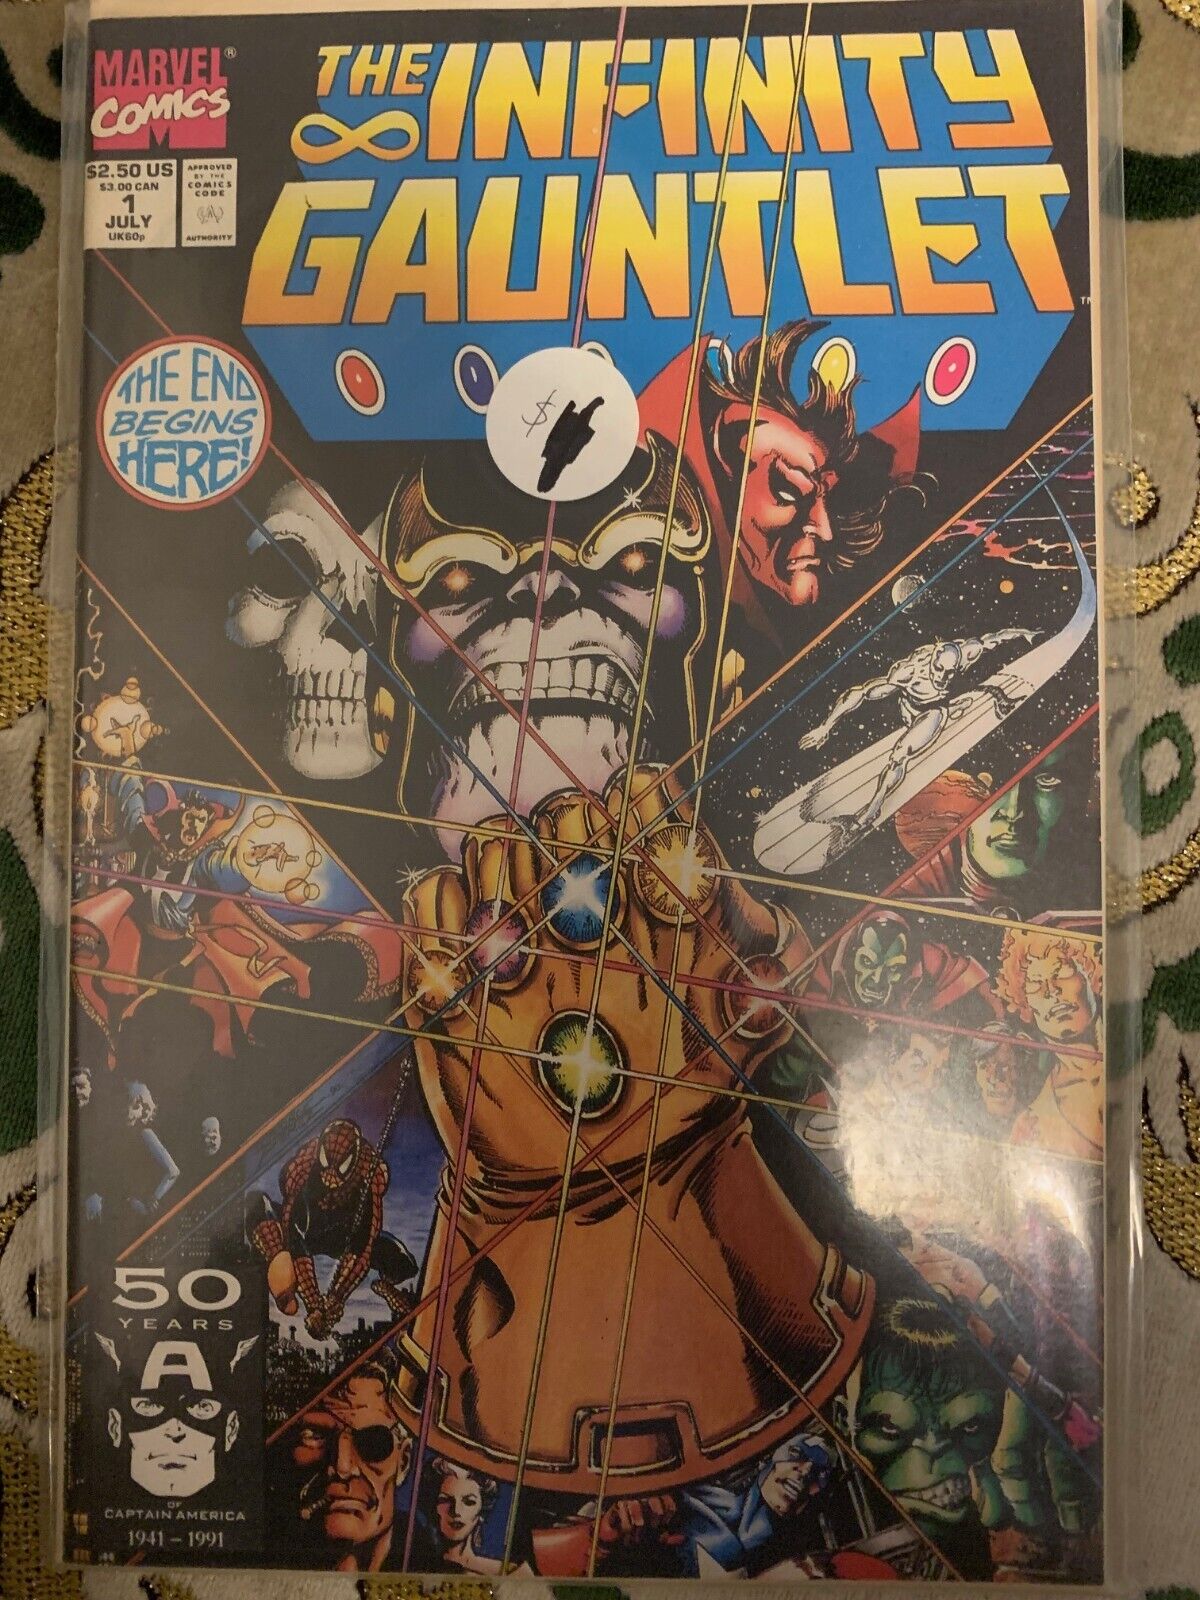 The Infinity Gauntlet #1 (Marvel Comics July 1991)